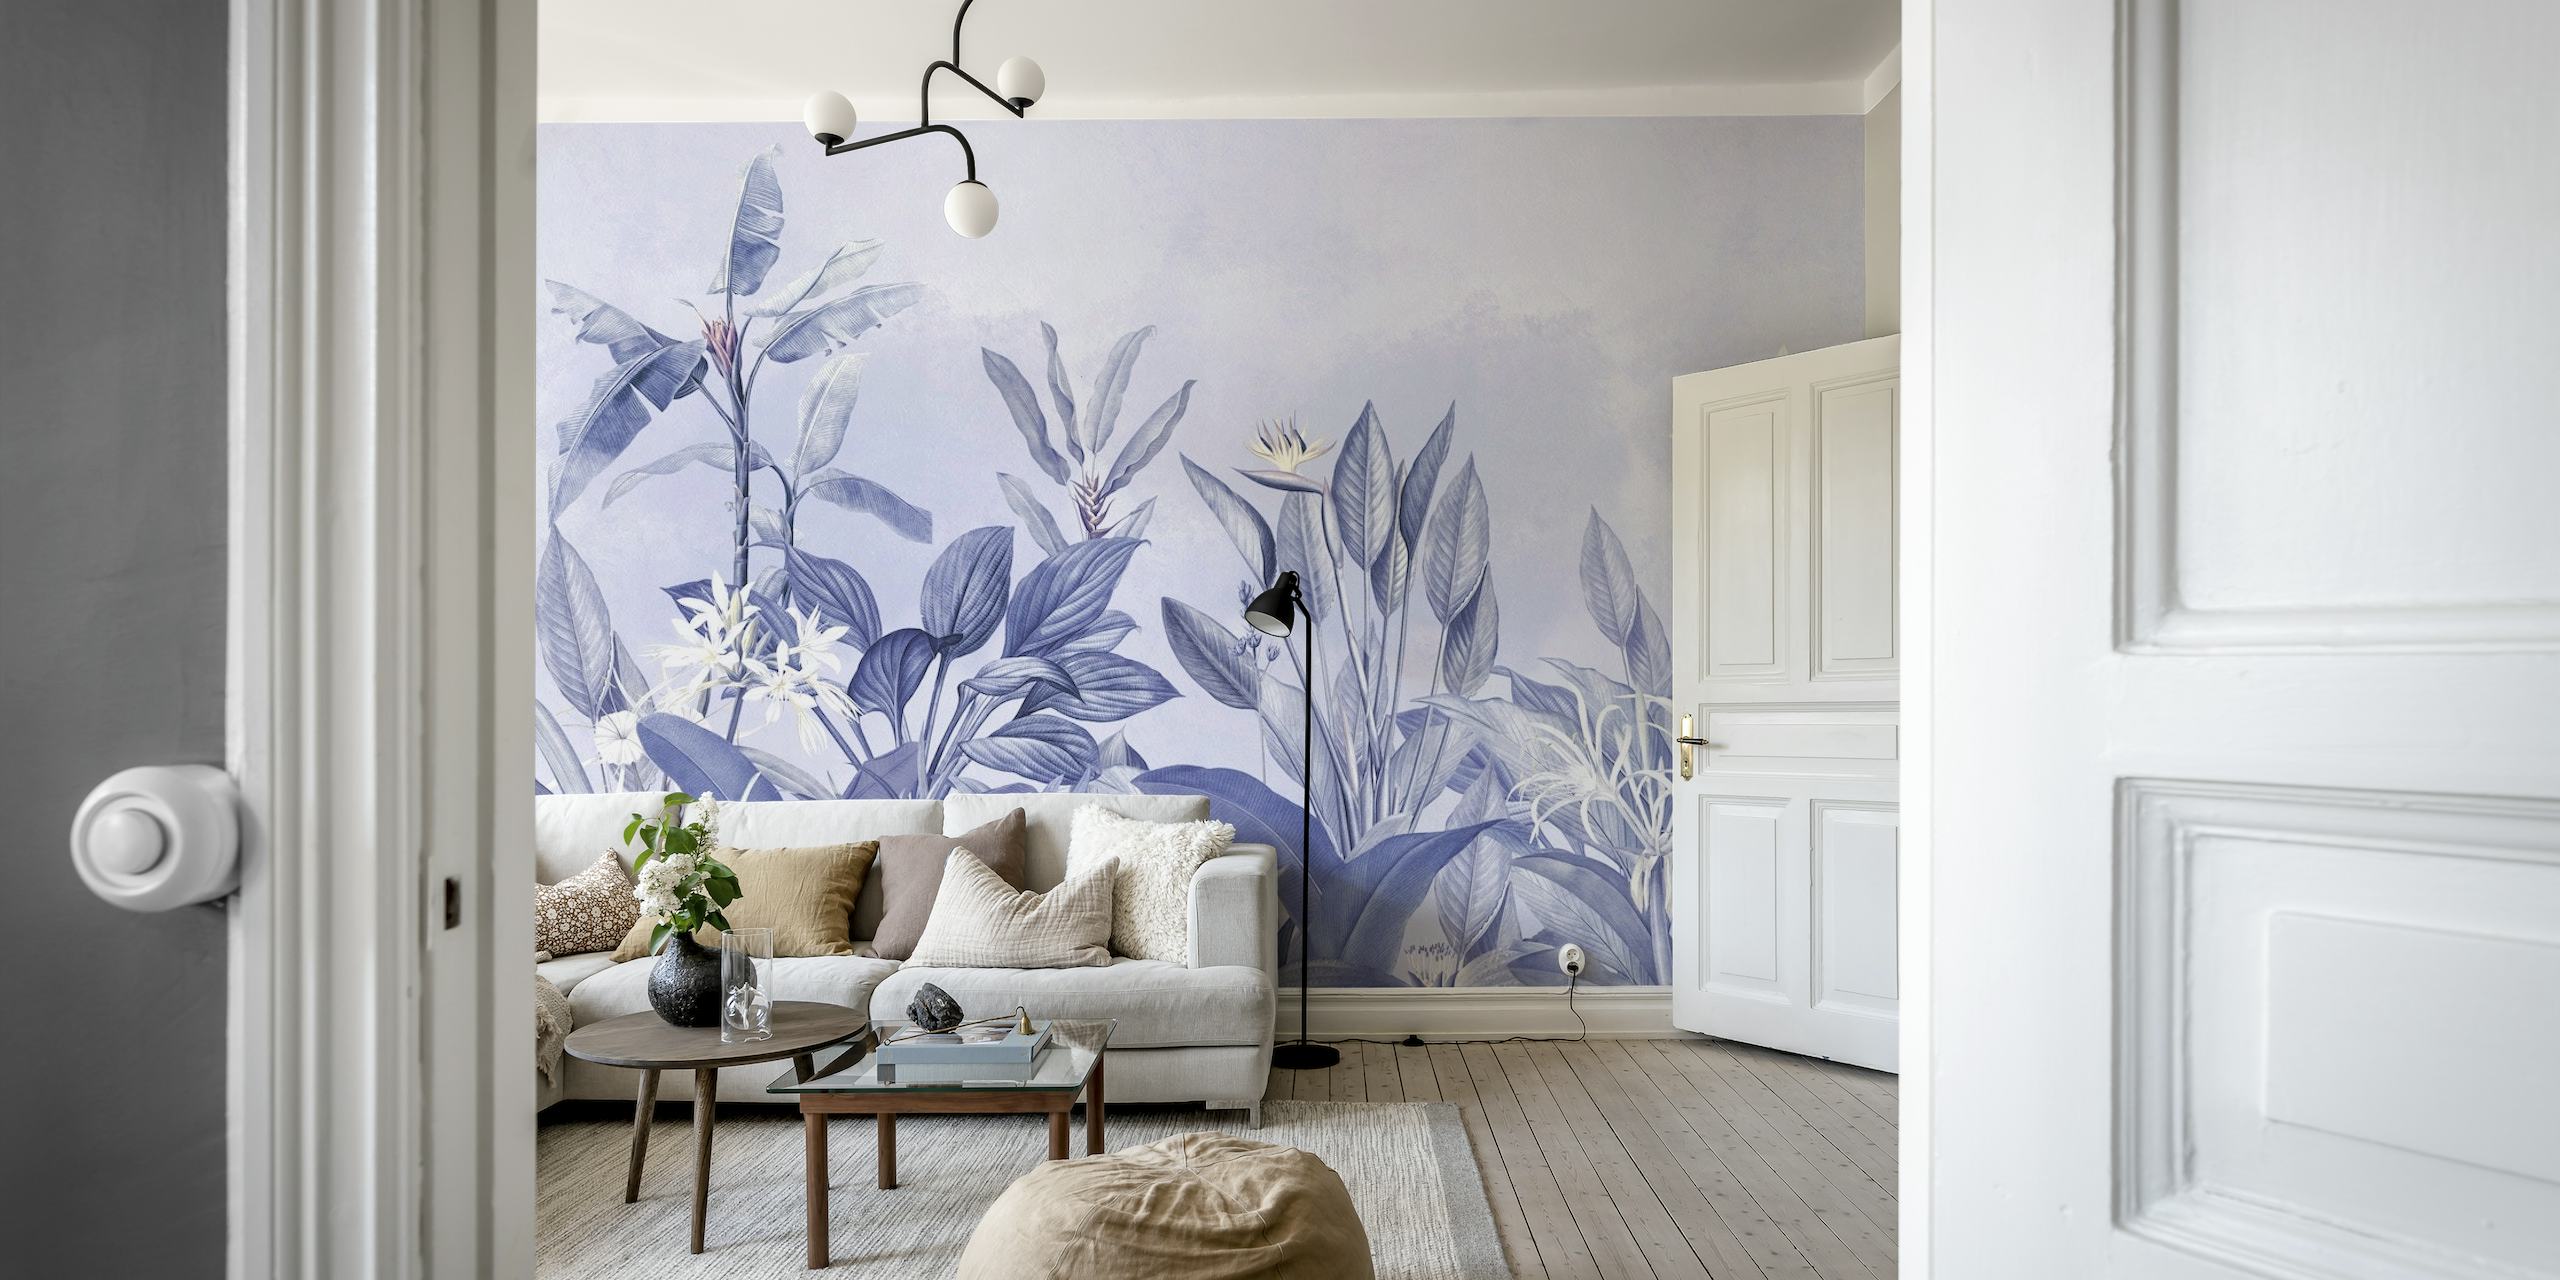 Elegante murale vintage da giardino botanico nei toni del blu e del bianco